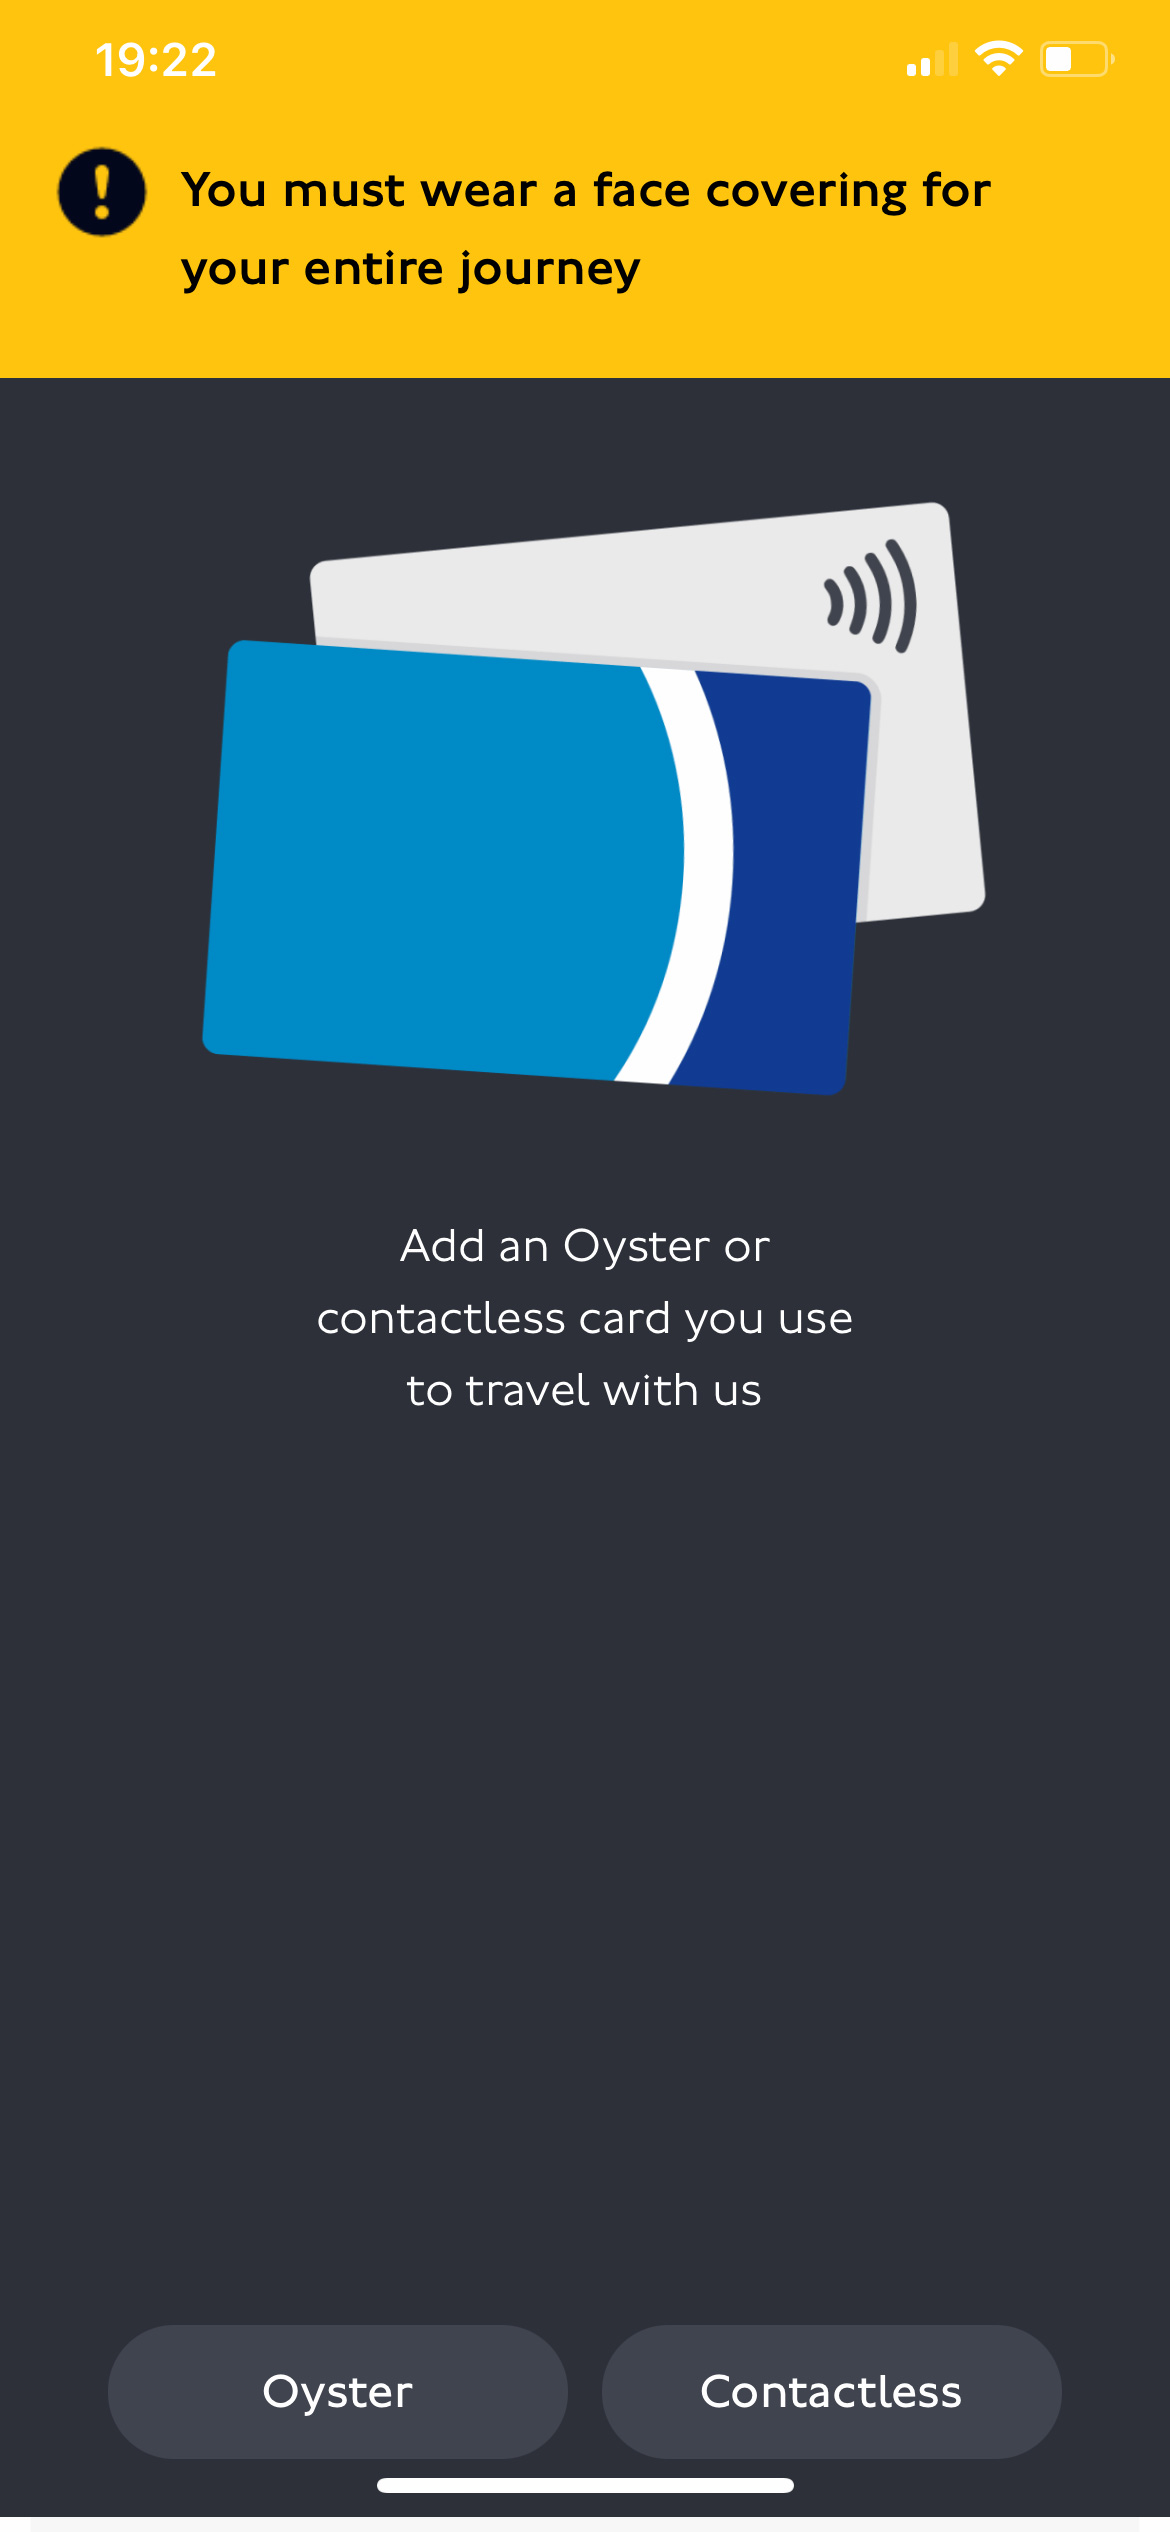 倫敦地鐵 ：下載「TfL Oyster and contactless」APP追蹤交通費